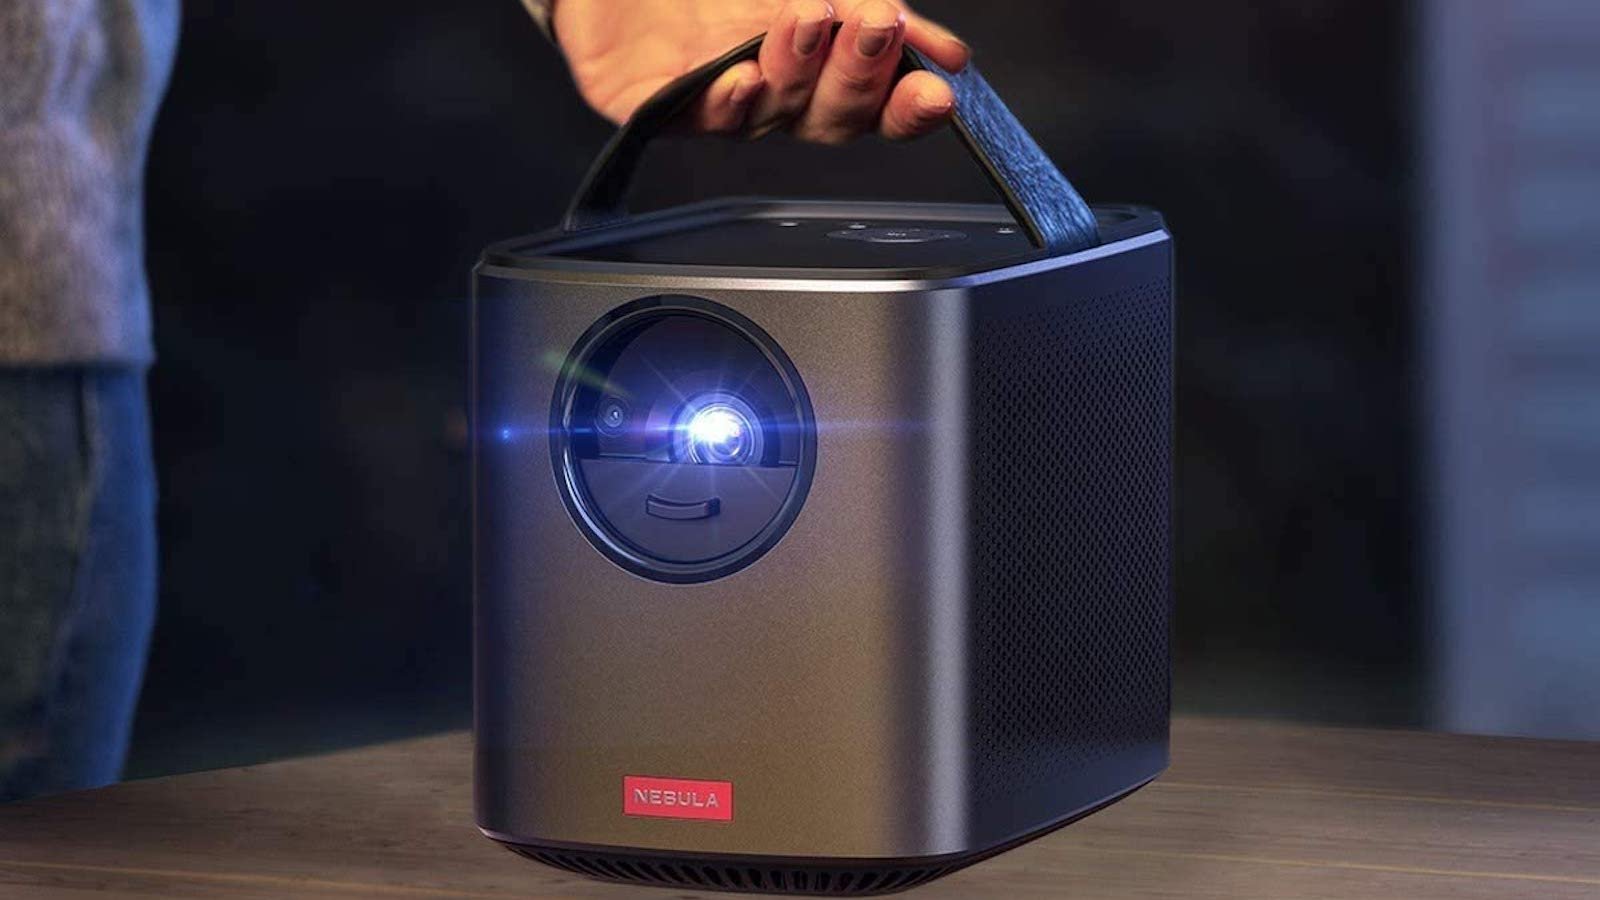 Anker Nebula Mars II Pro portable projector uses IntelliBright tech to emit 500 lumens